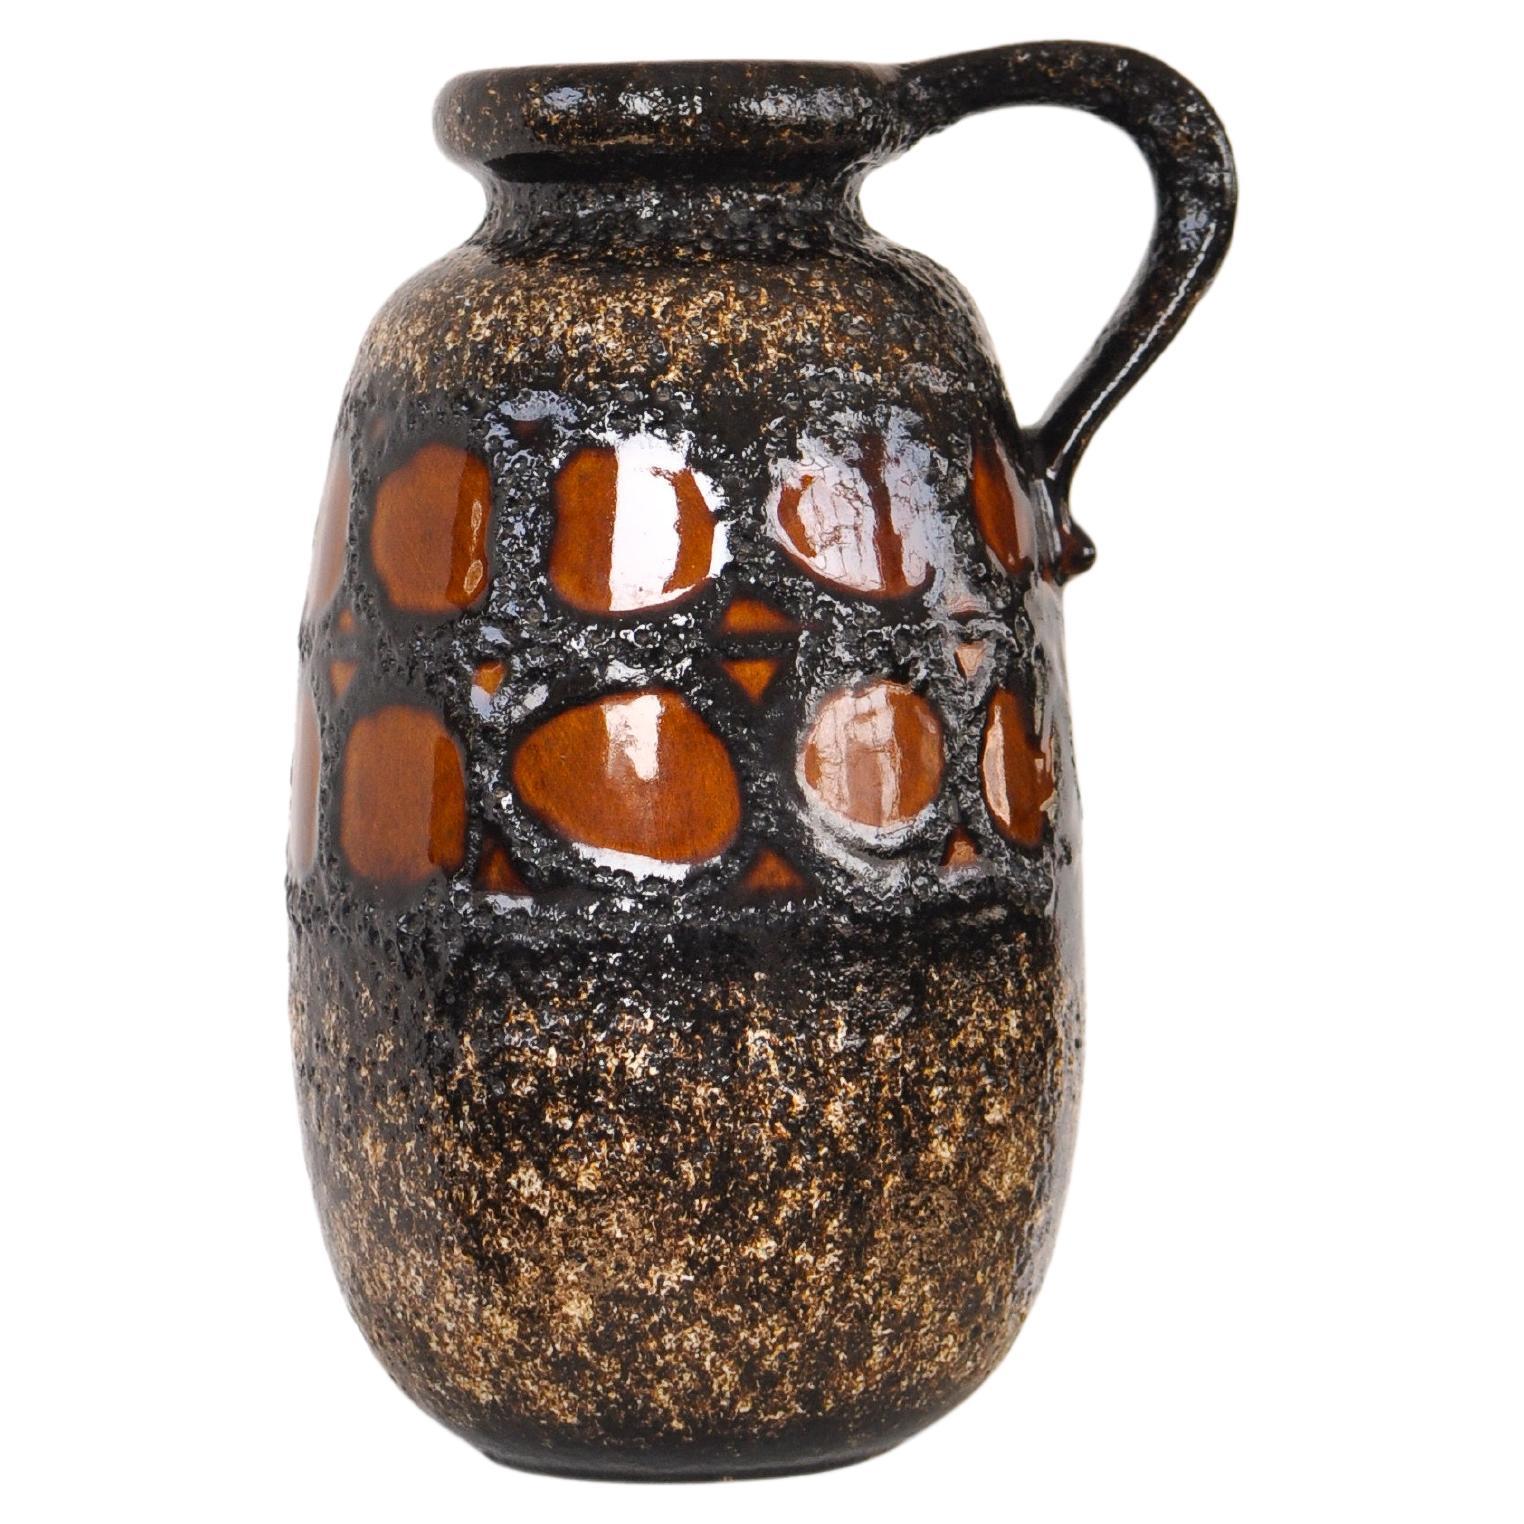 Midcentury German Ceramic Lava Vase 484-27 by Scheurich Keramik, c. 1970